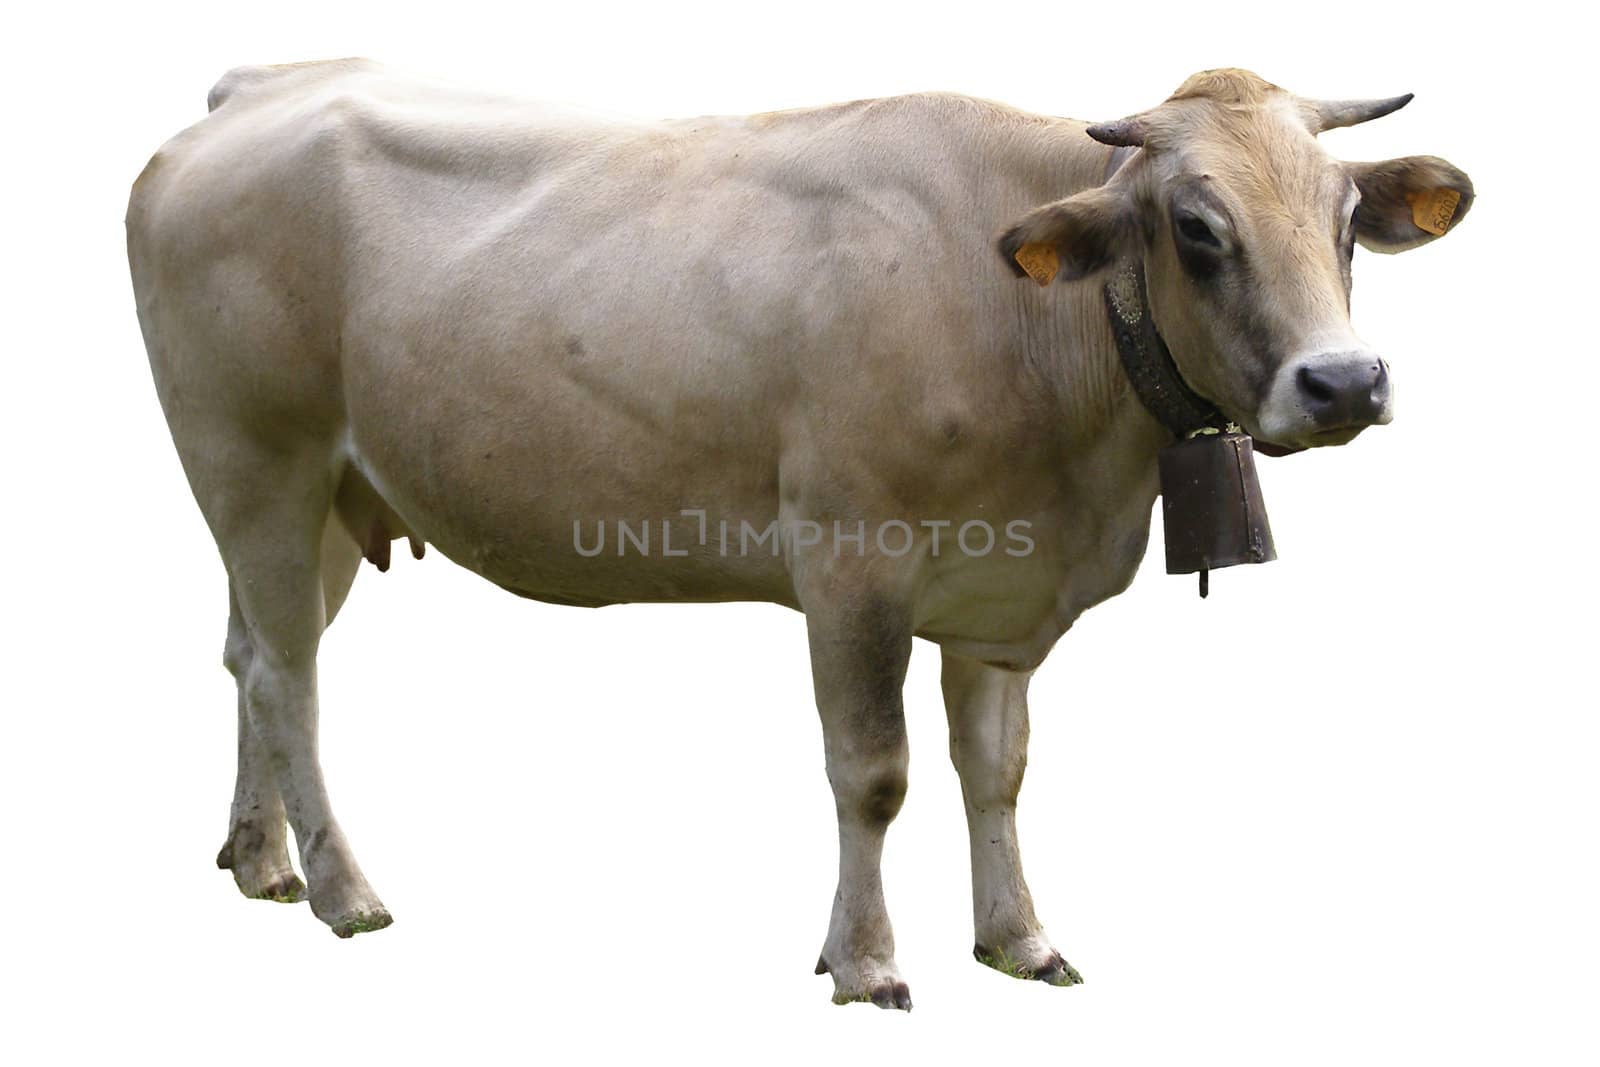 Cow by claudiodivizia